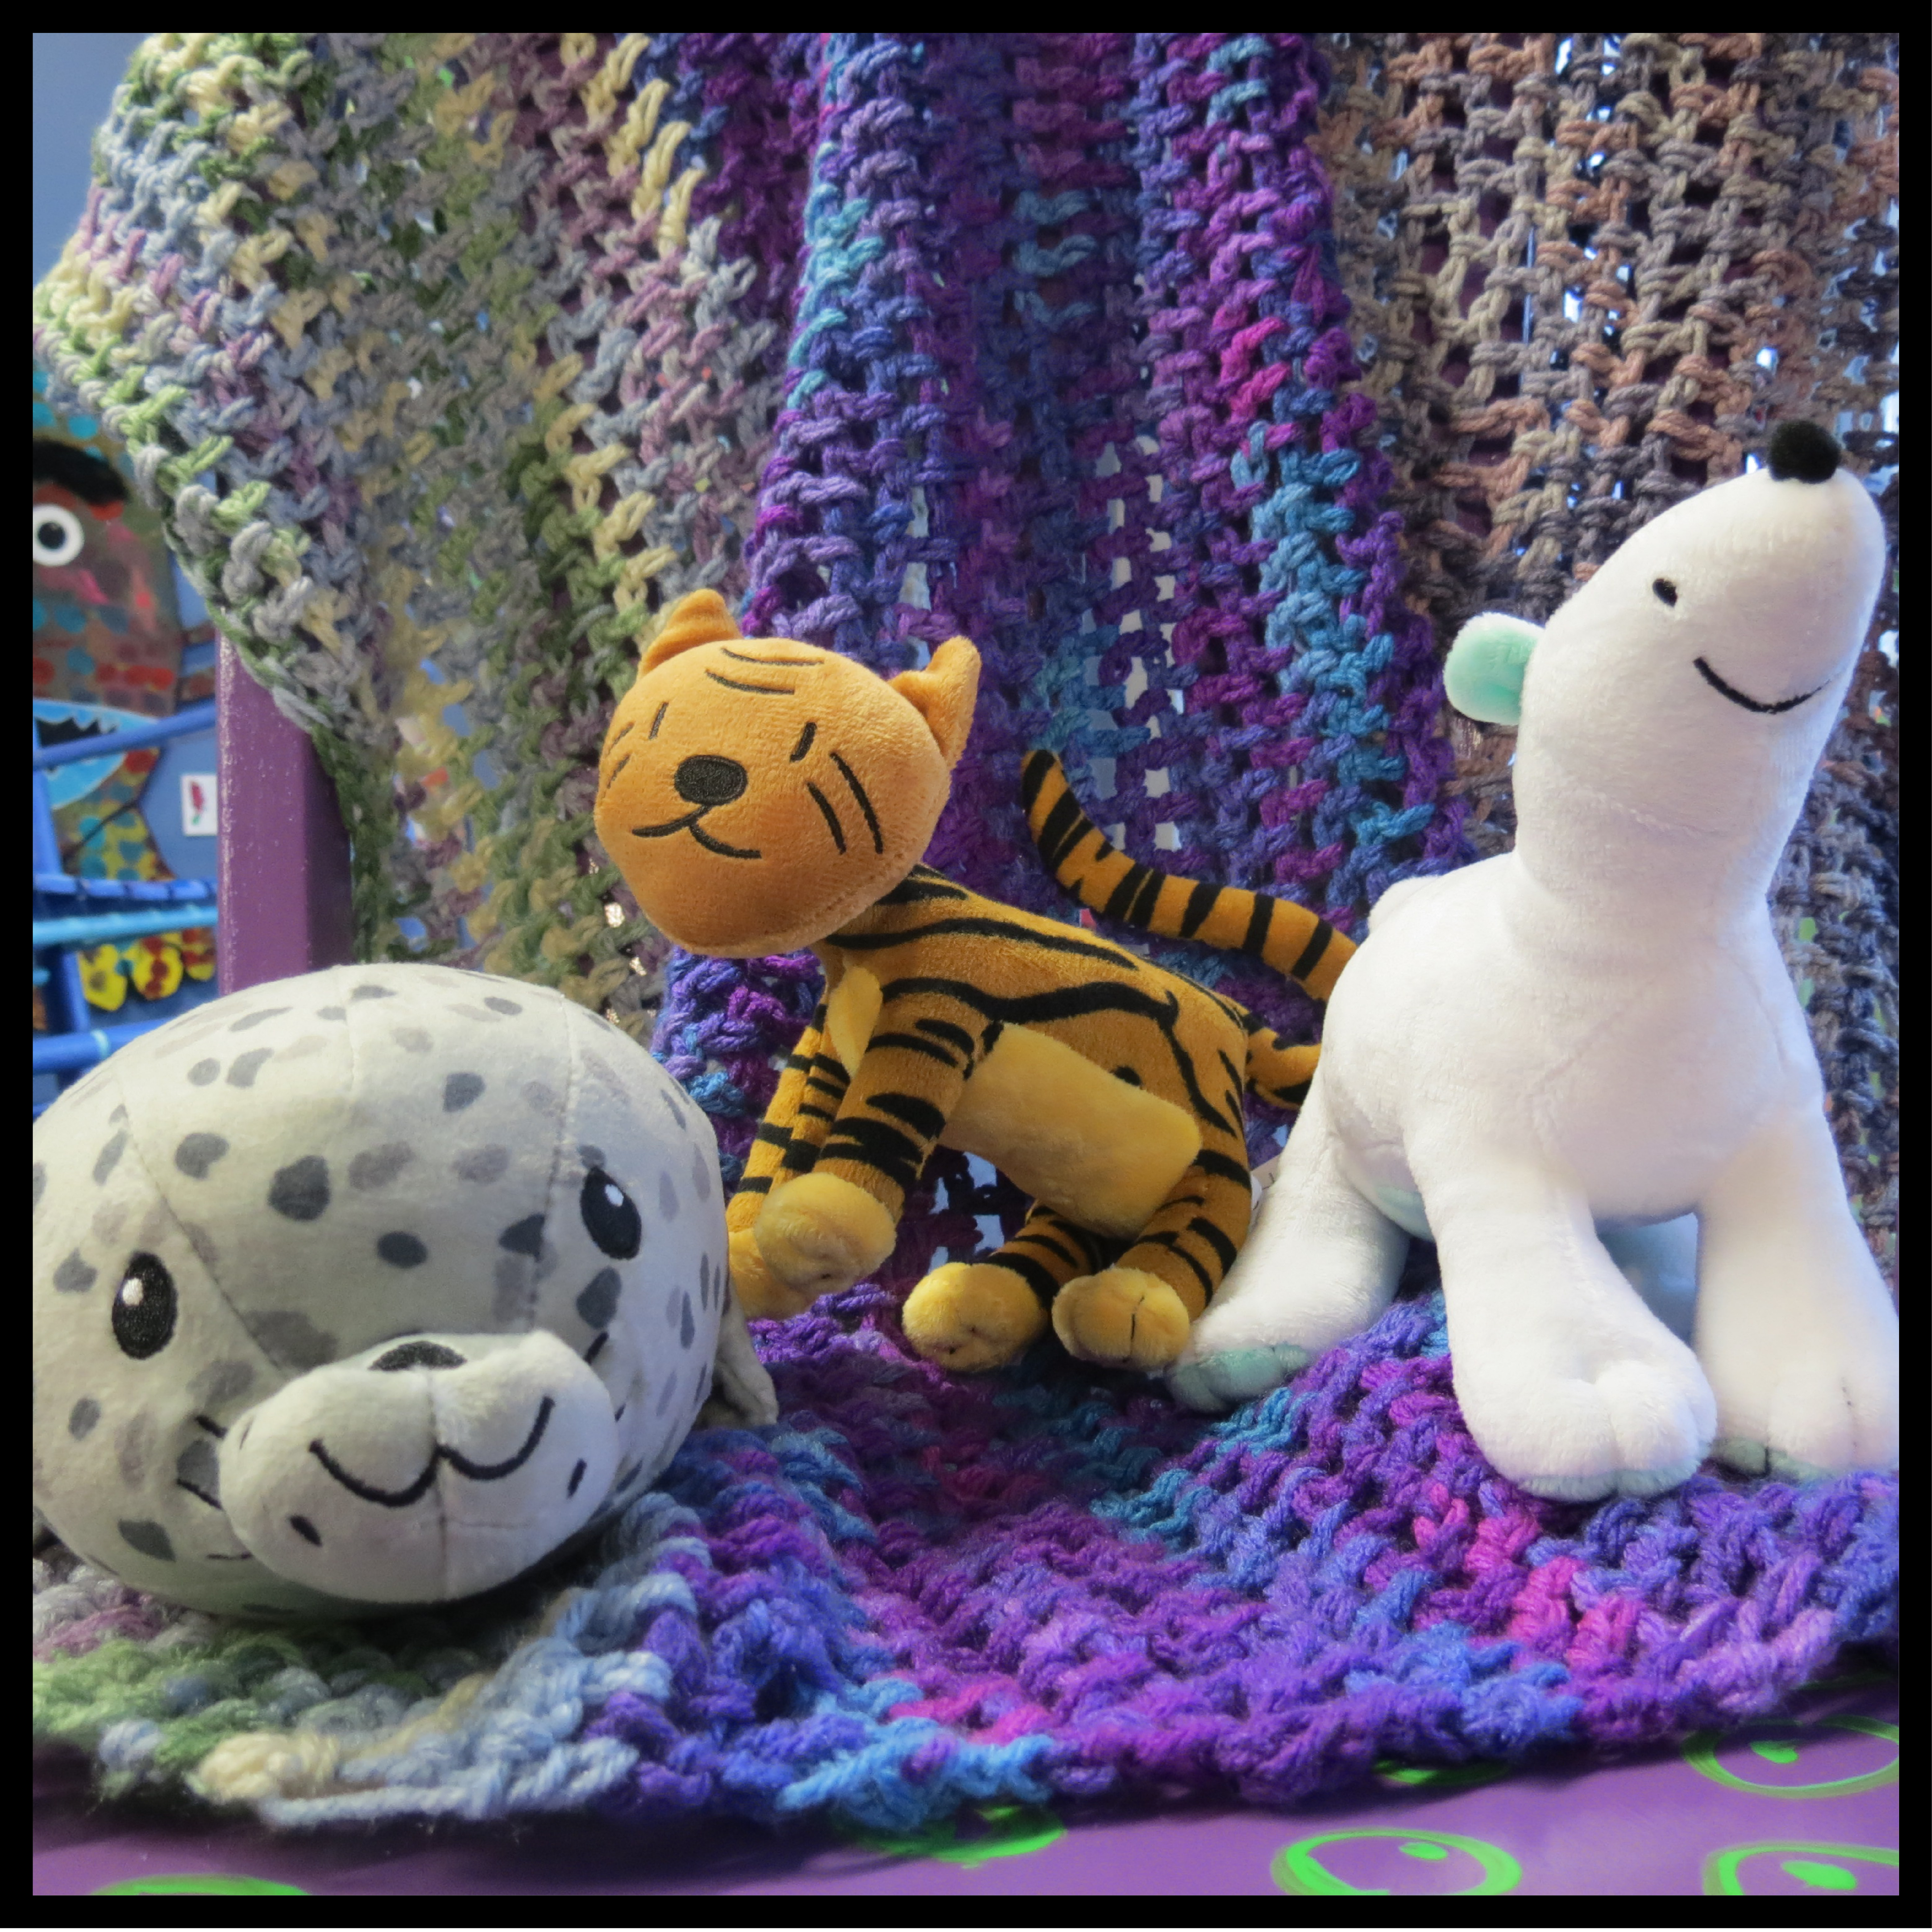 Three stuffed zoo animals, including a seal, tiger, and polar bear.